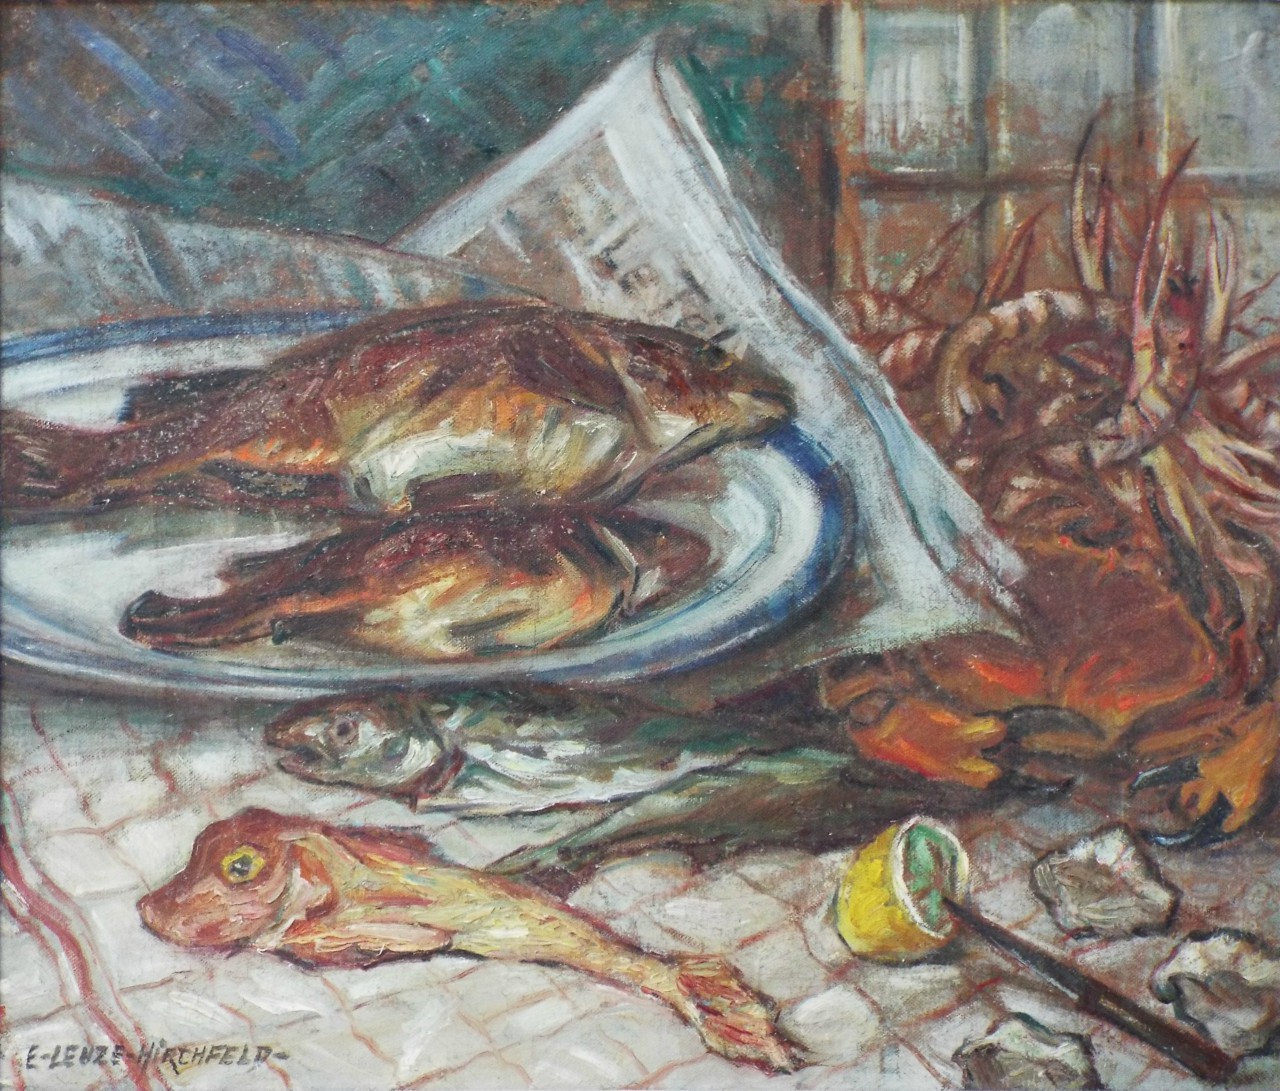 Oil on canvas - Still life of sea food on a table